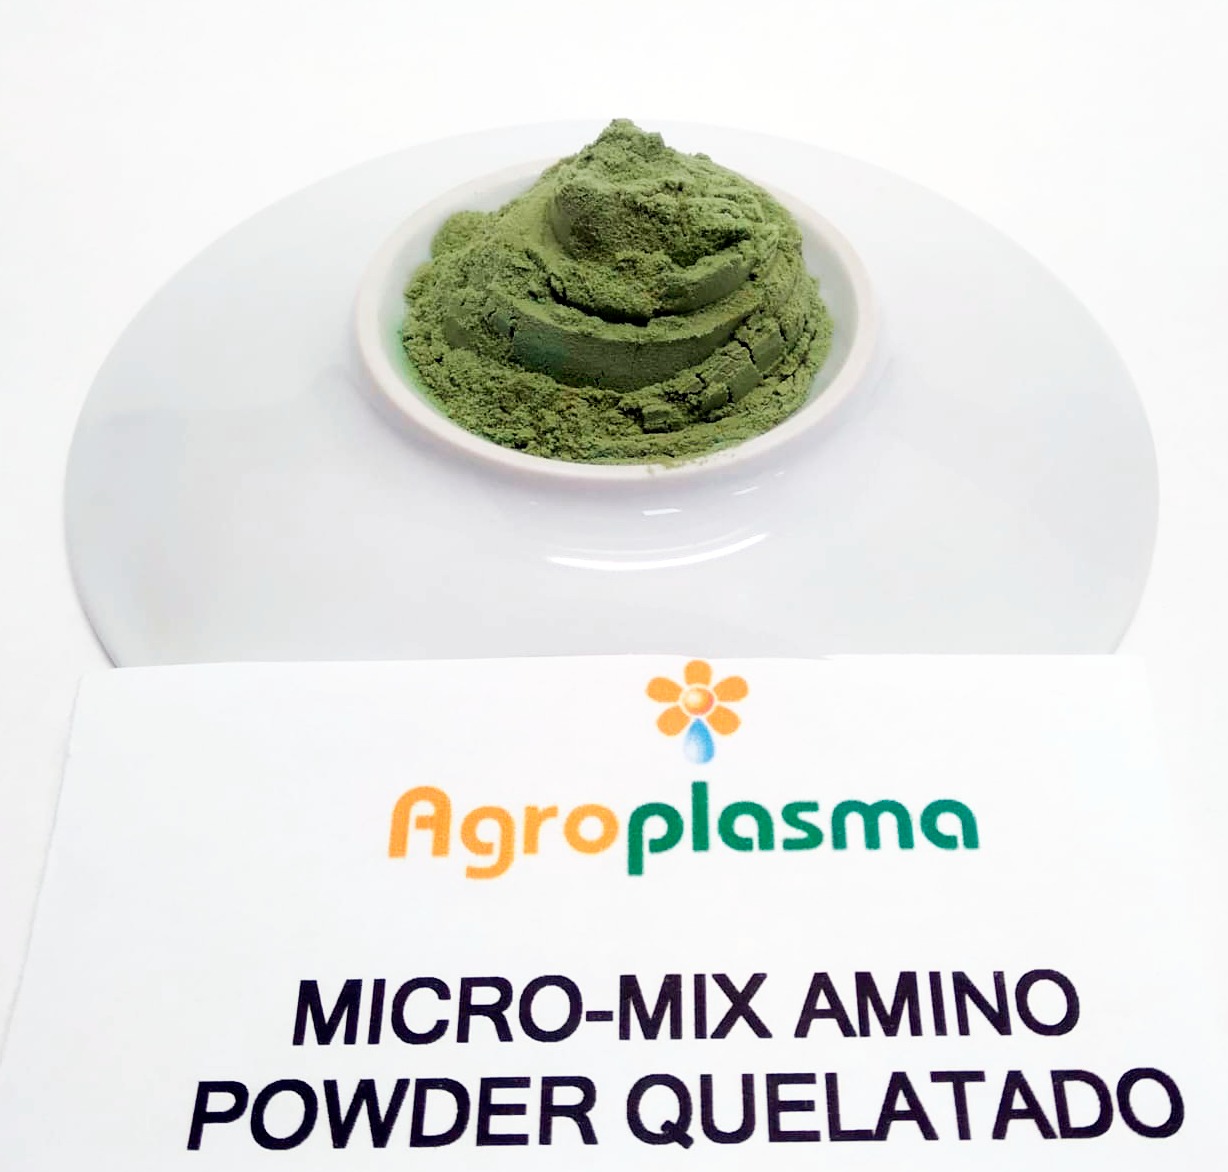 micro-mix amino powder quelated